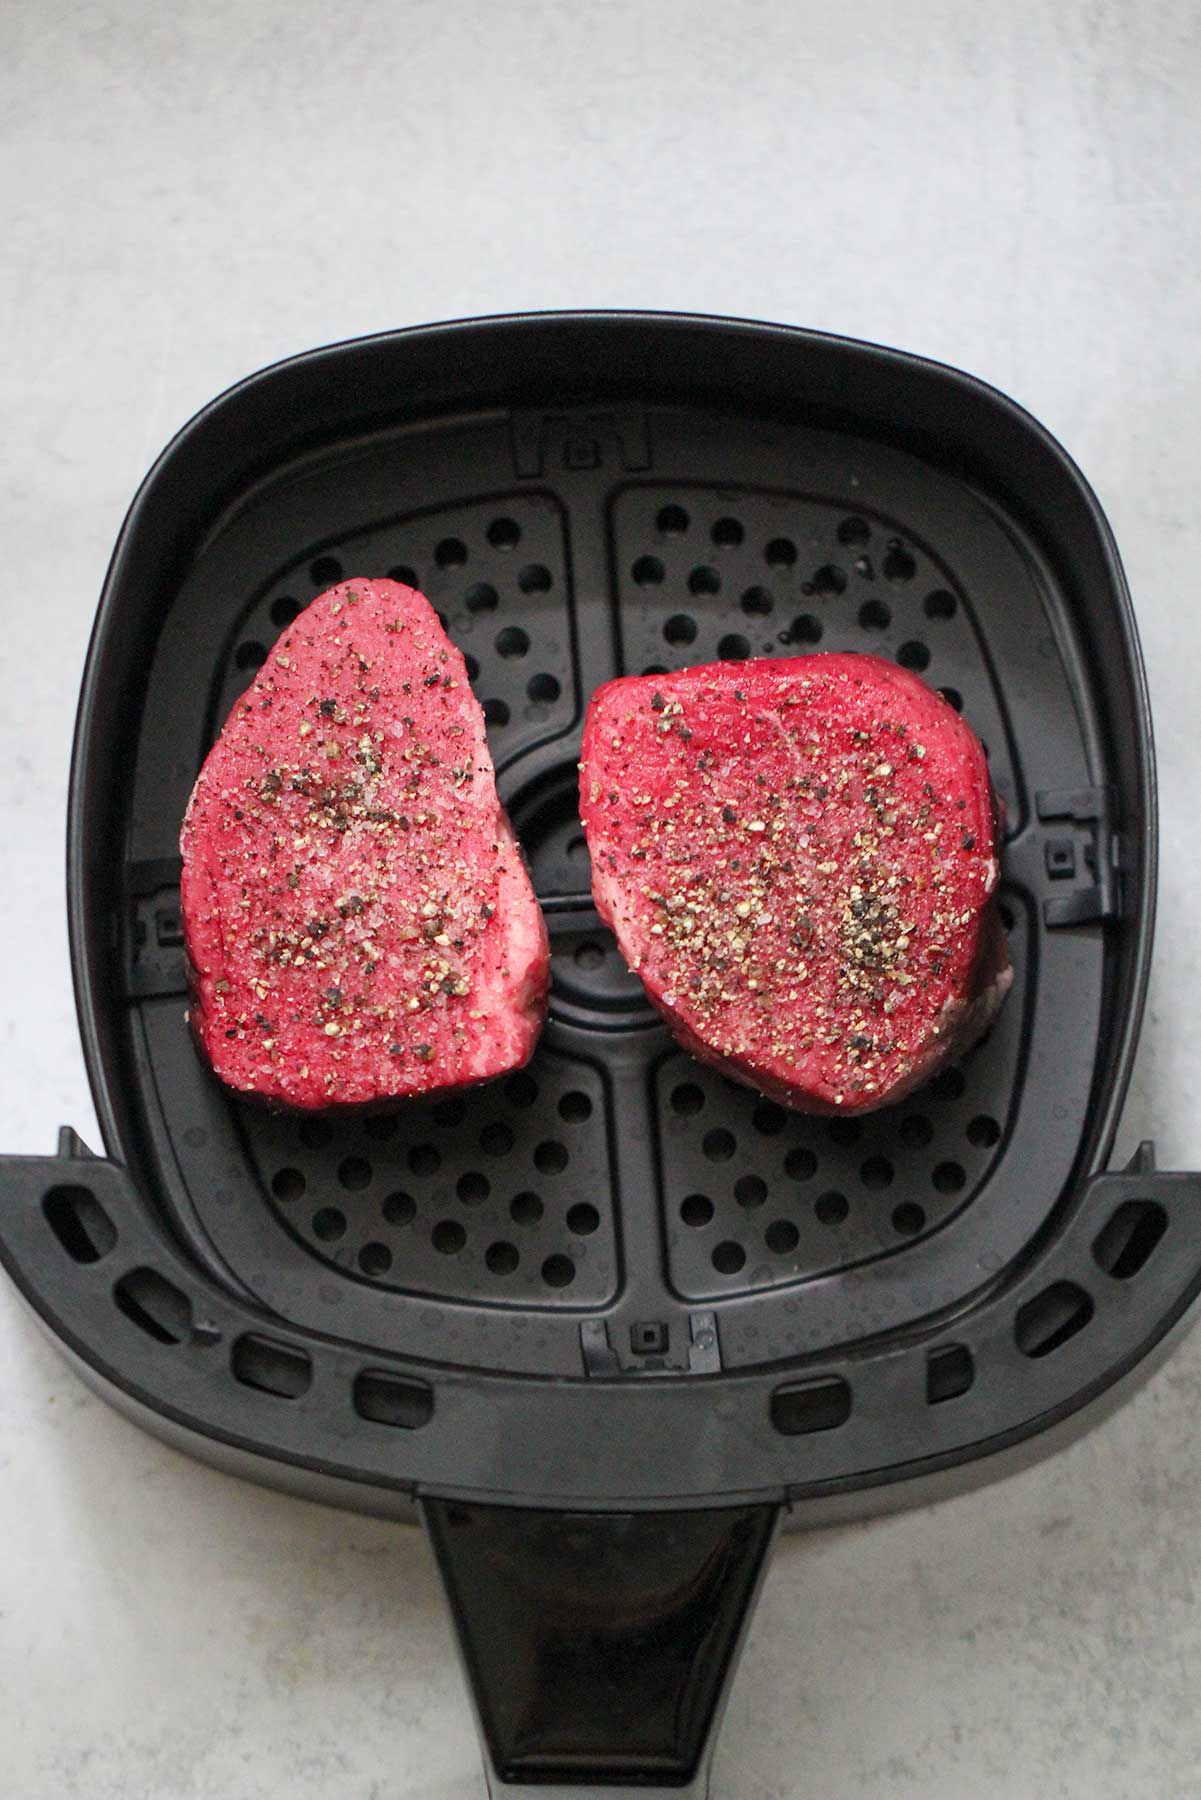 two raw filet mignon steaks in an air fryer basket.